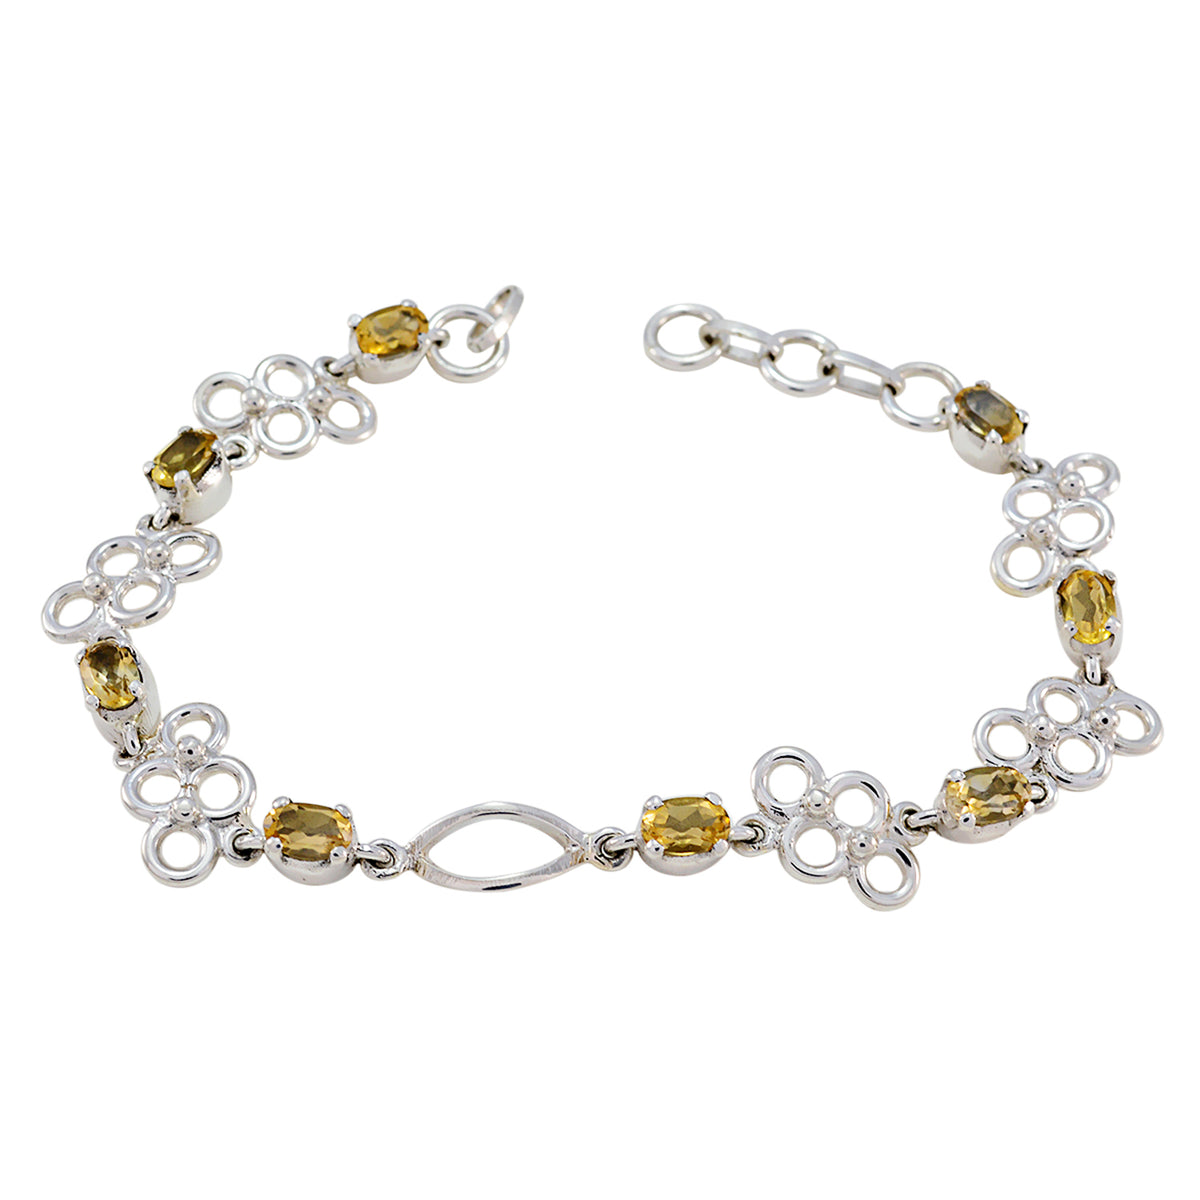 Riyo Good Gemstones Oval Faceted Yellow Citrine Silver Bracelet gift for easter Sunday